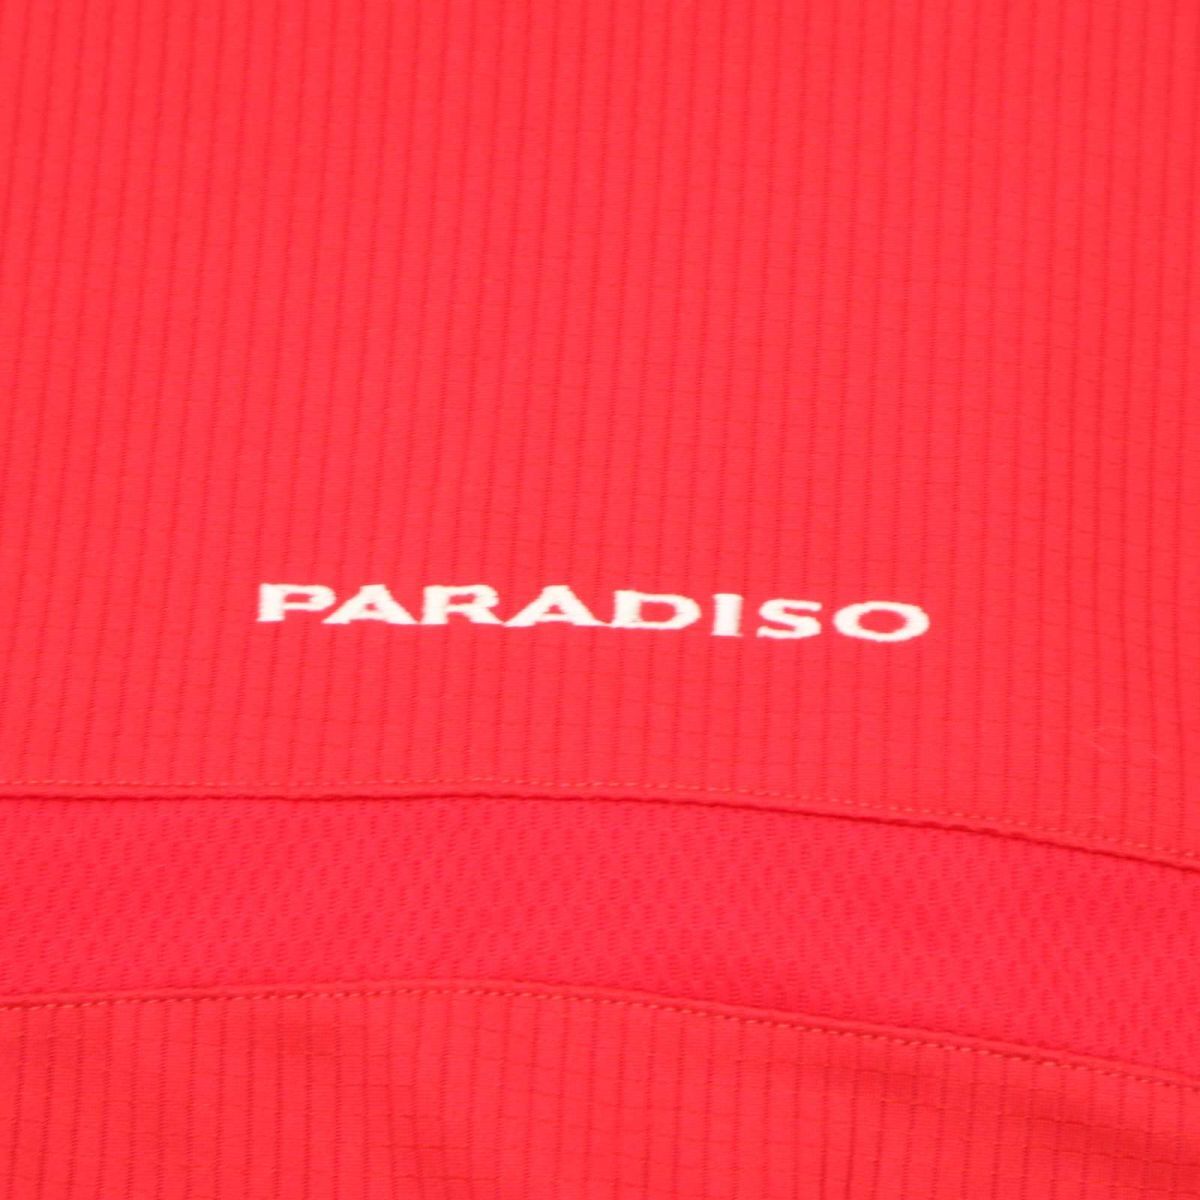 Paradiso GOLF Paradiso Golf весна лето короткий рукав Logo вышивка *mok шея cut and sewn футболка Sz.3L мужской большой размер красный C4T03842_4#A